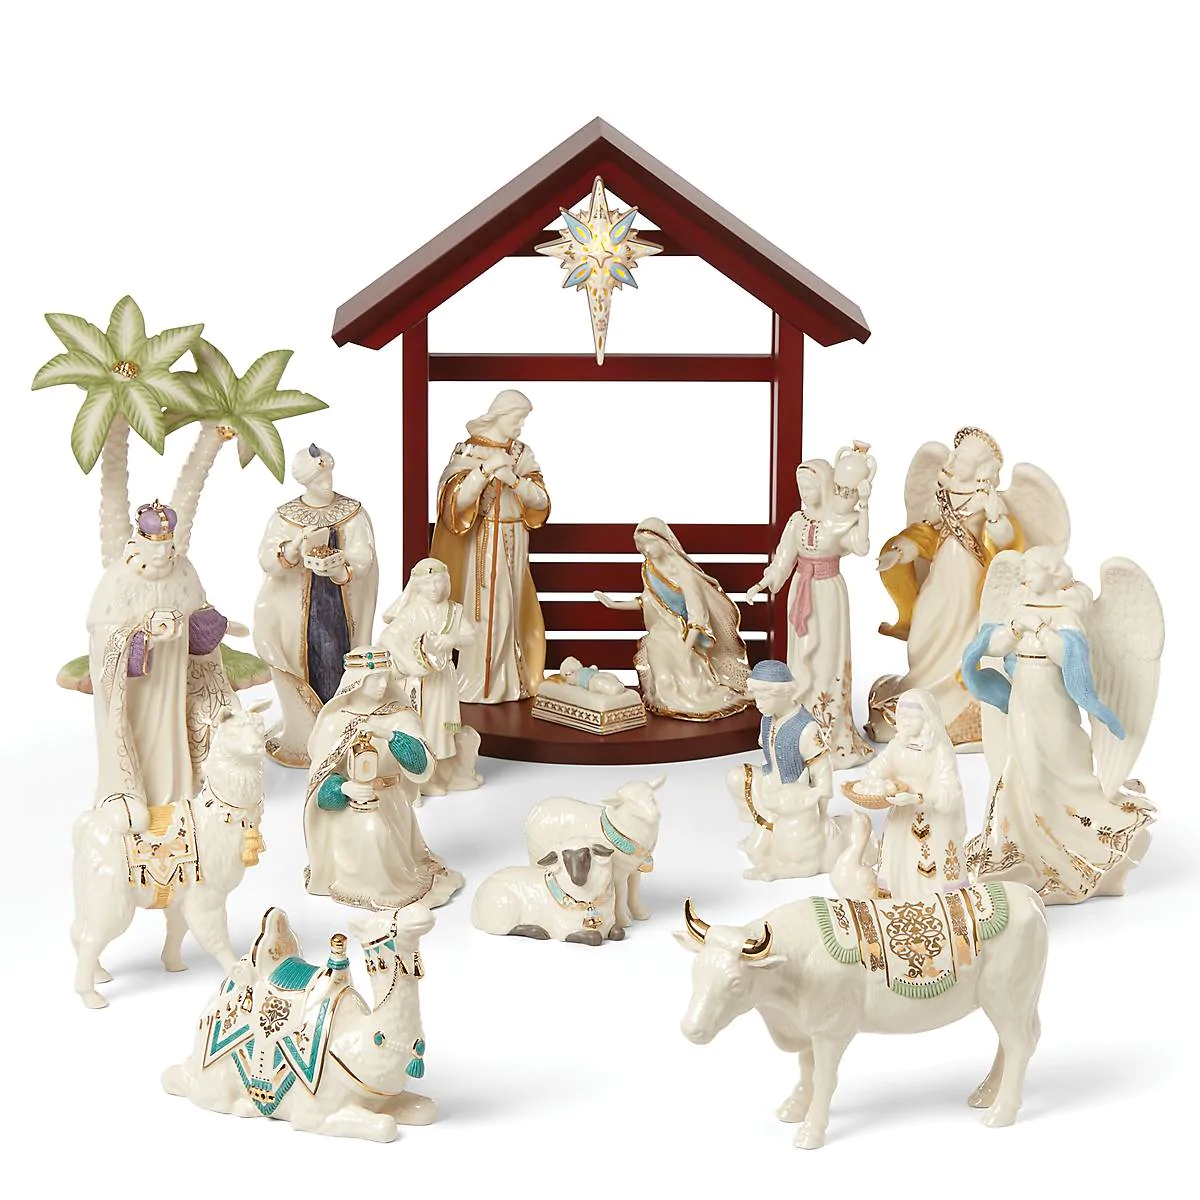 Lenox’s Nativity Figurines